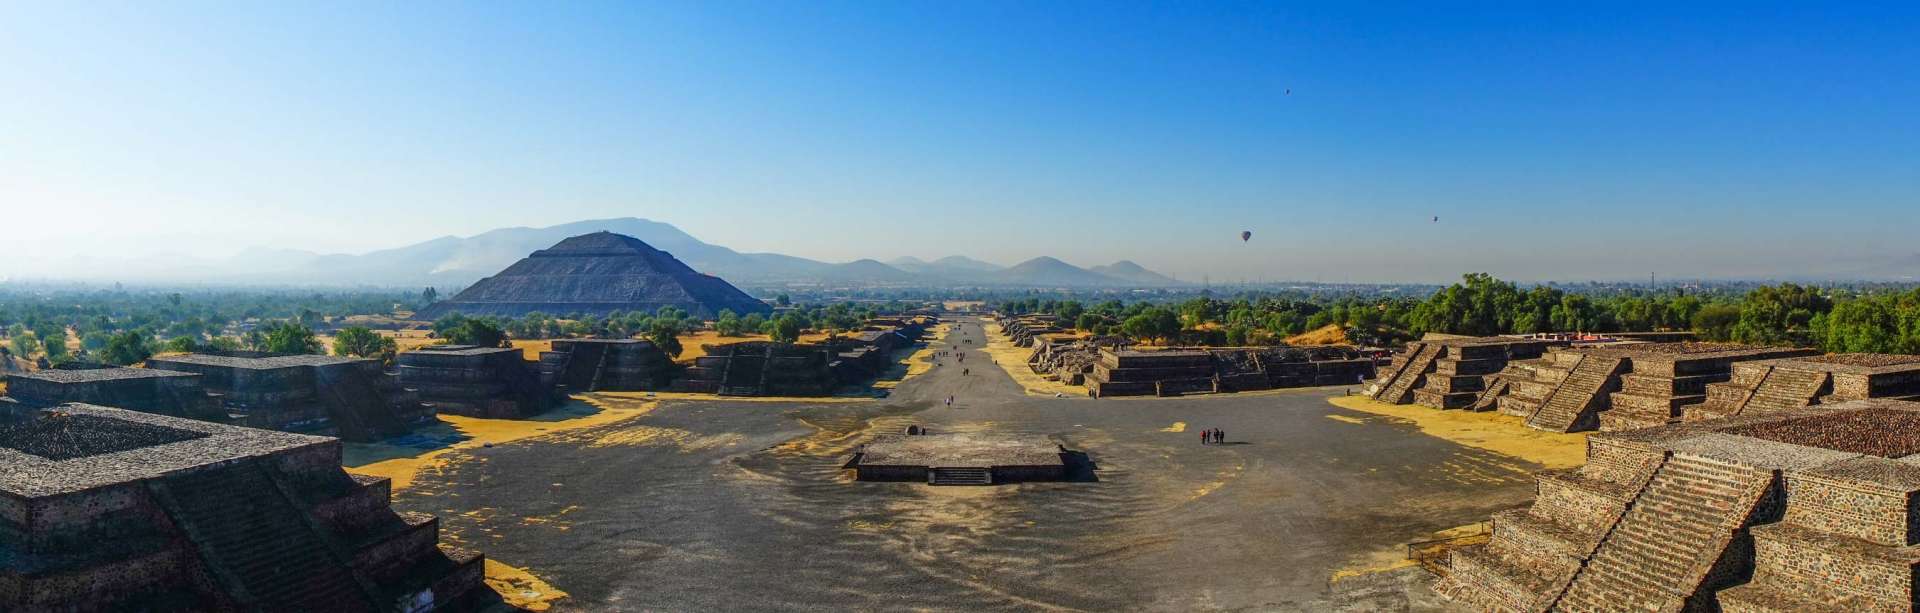 Teotihuacan Pyramids Mexico City Enrico Pescantini photographer 3